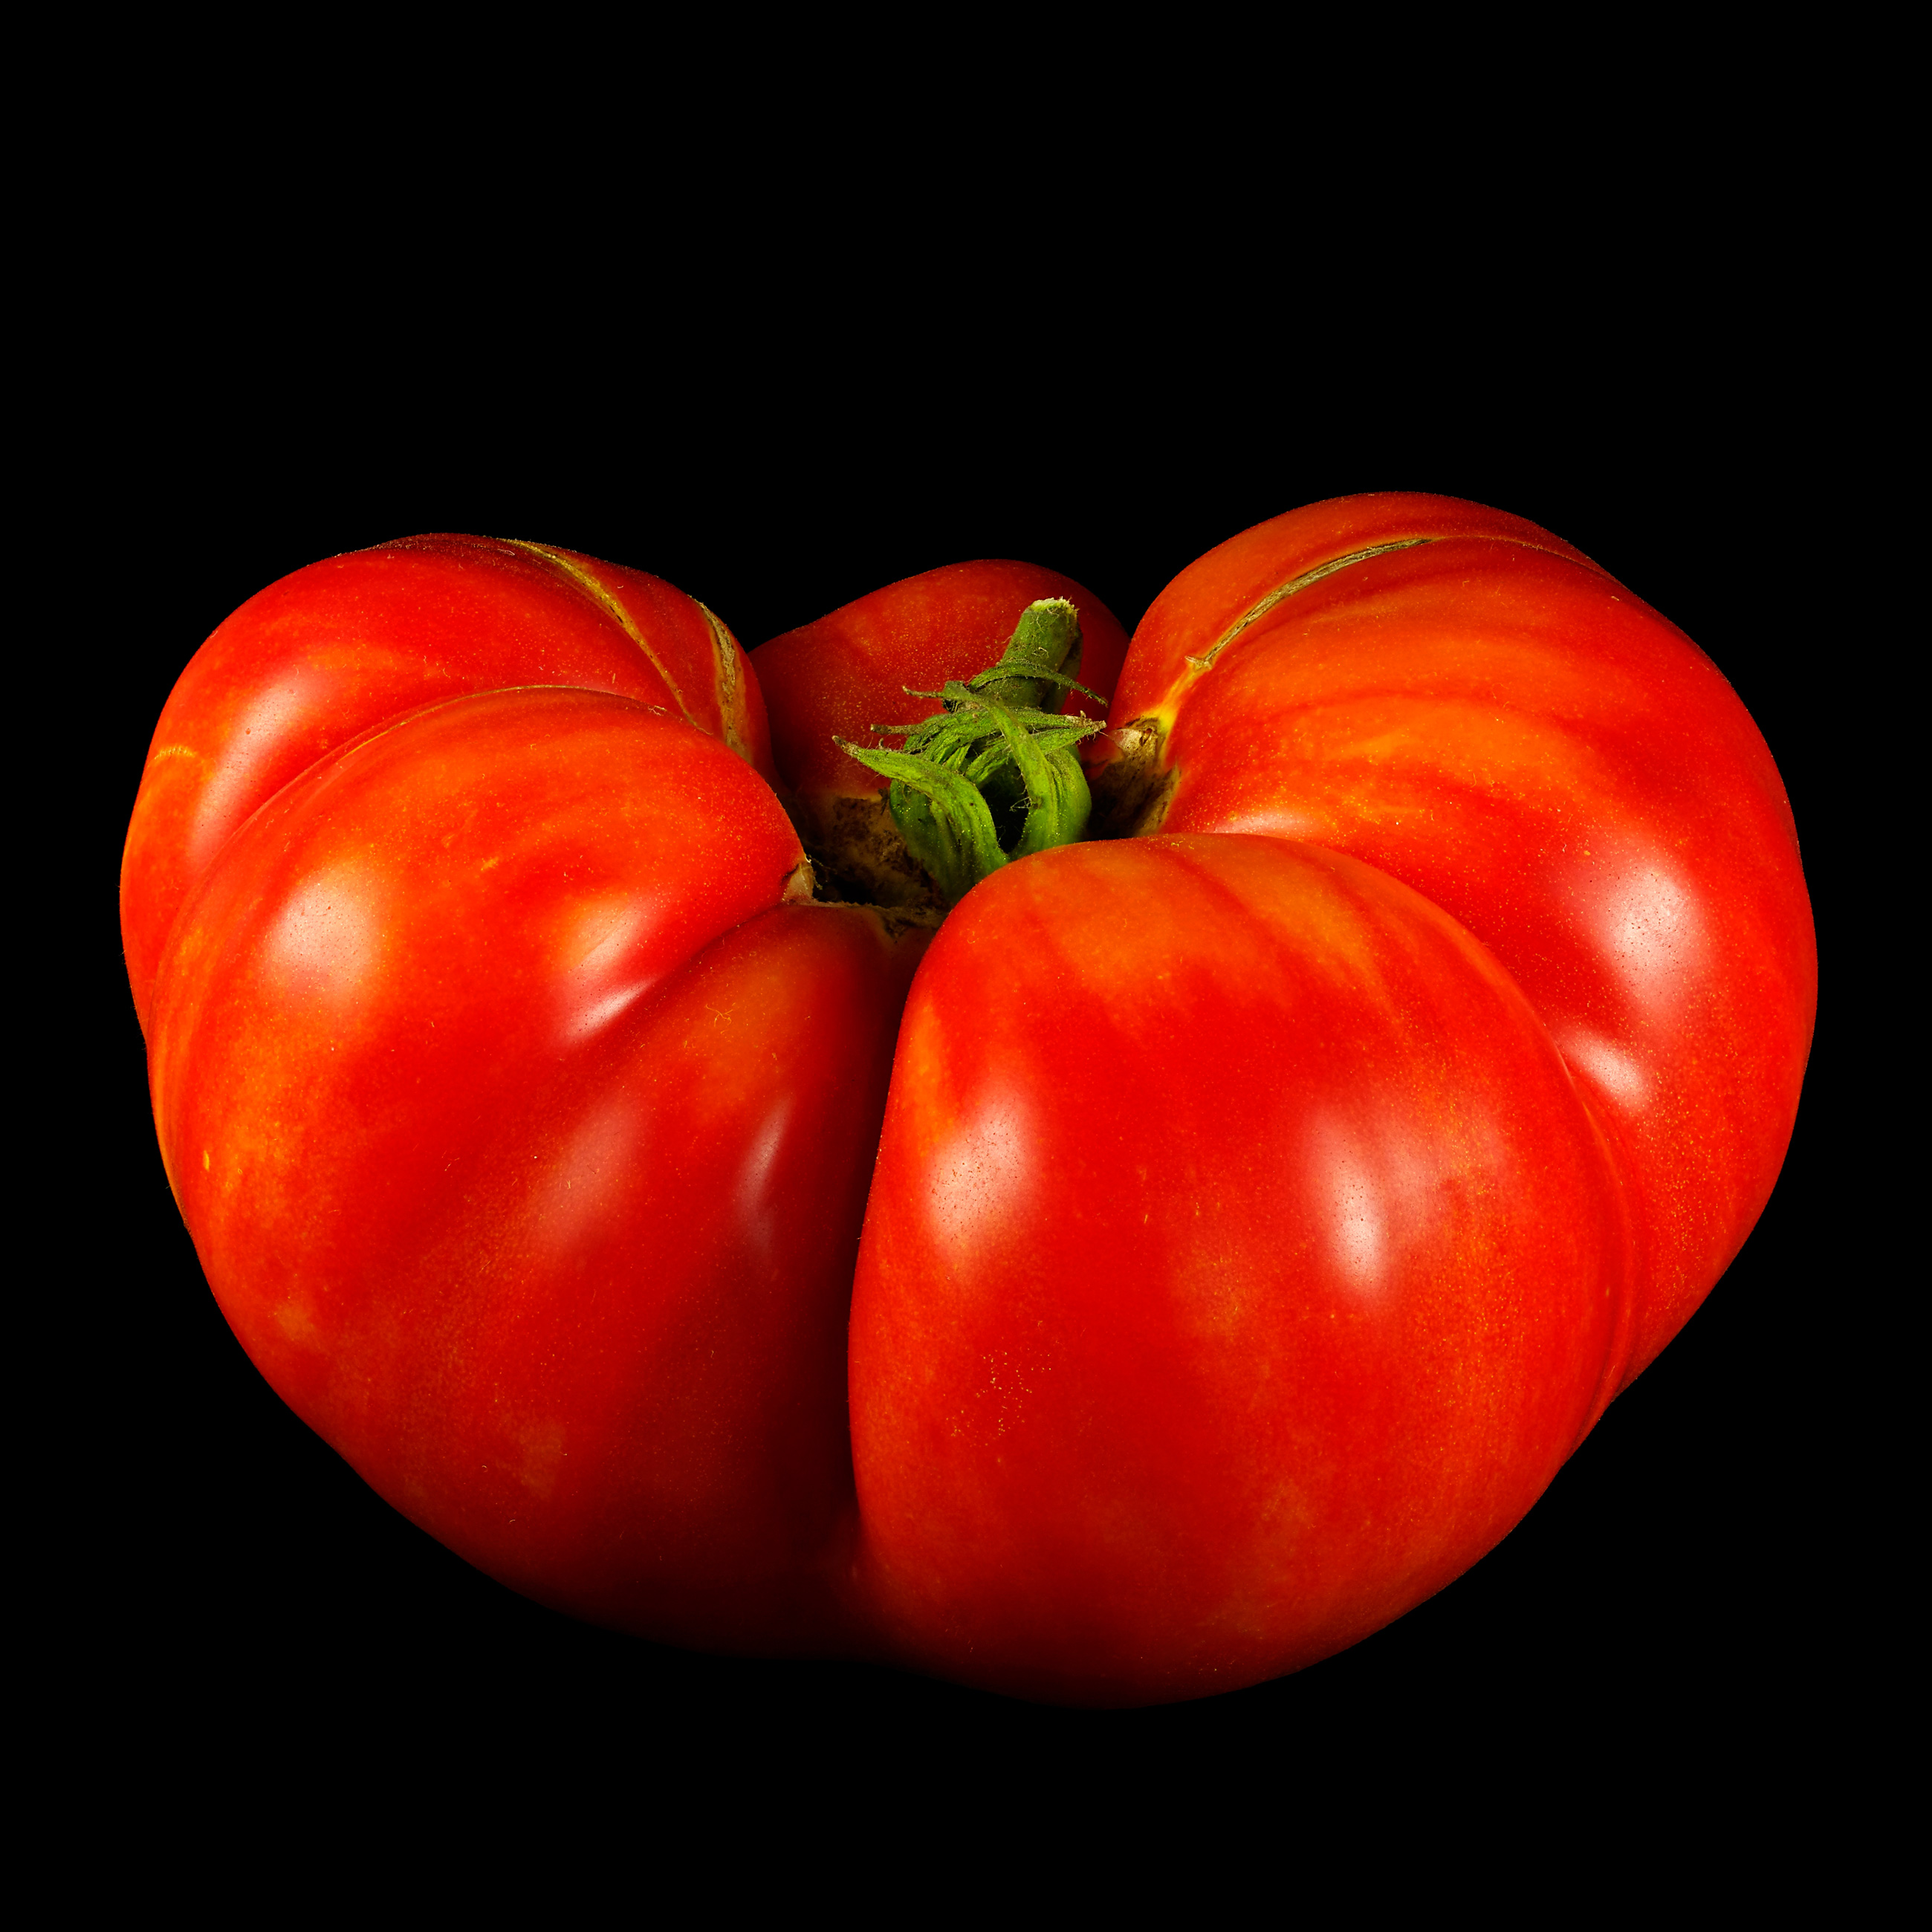 Pinapple-Tomato: Solanum lycopersicum ‘Pinapple’